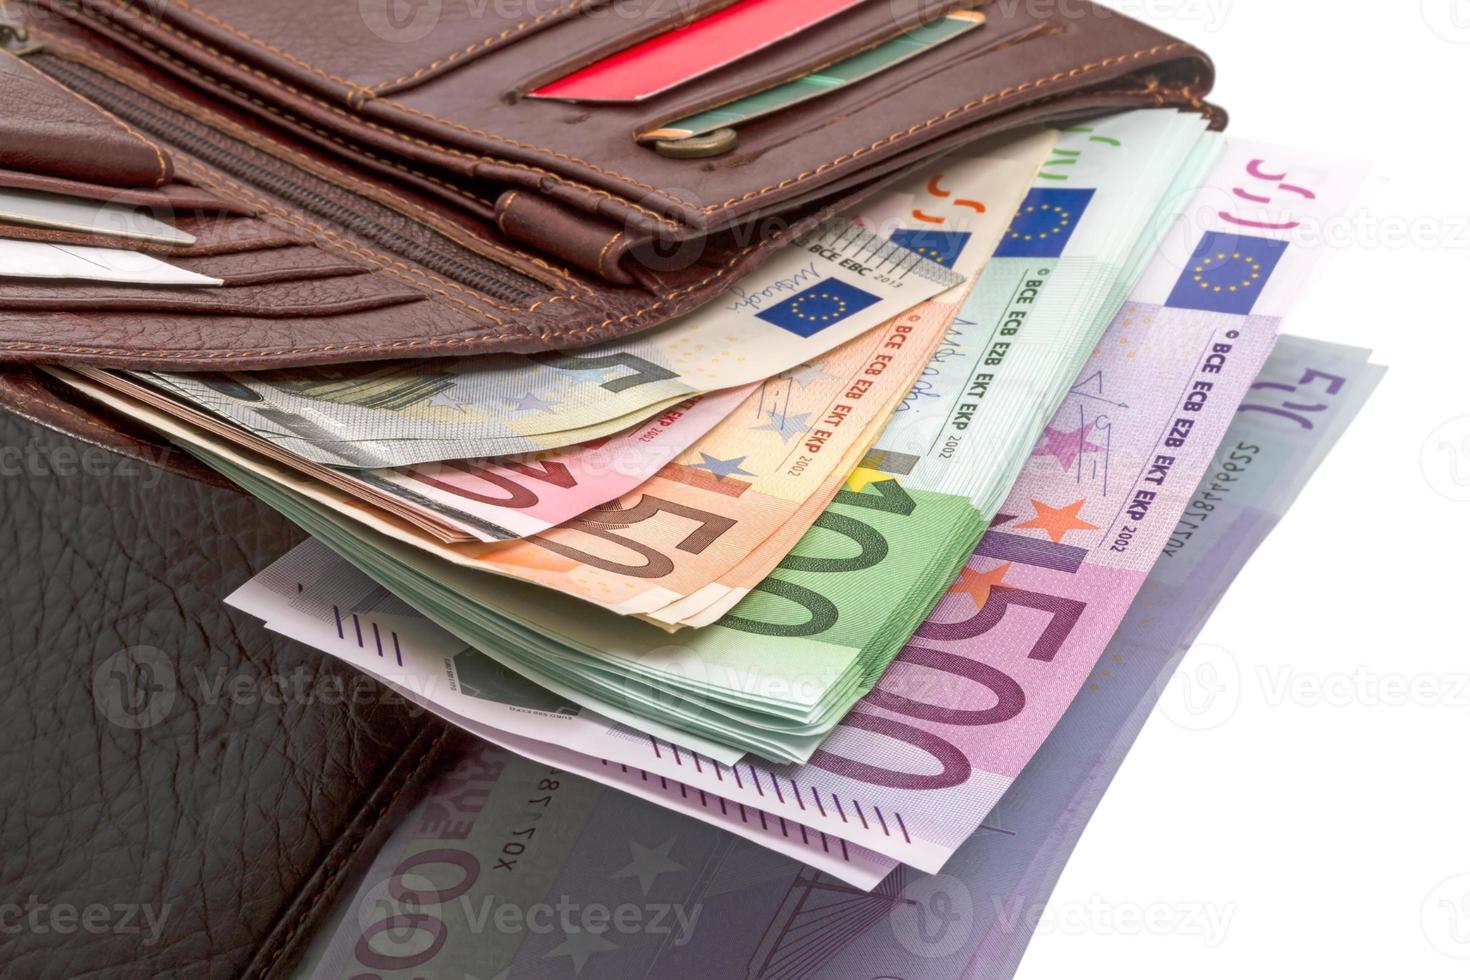 monedero con billetes en euros 1113411 Foto stock en Vecteezy